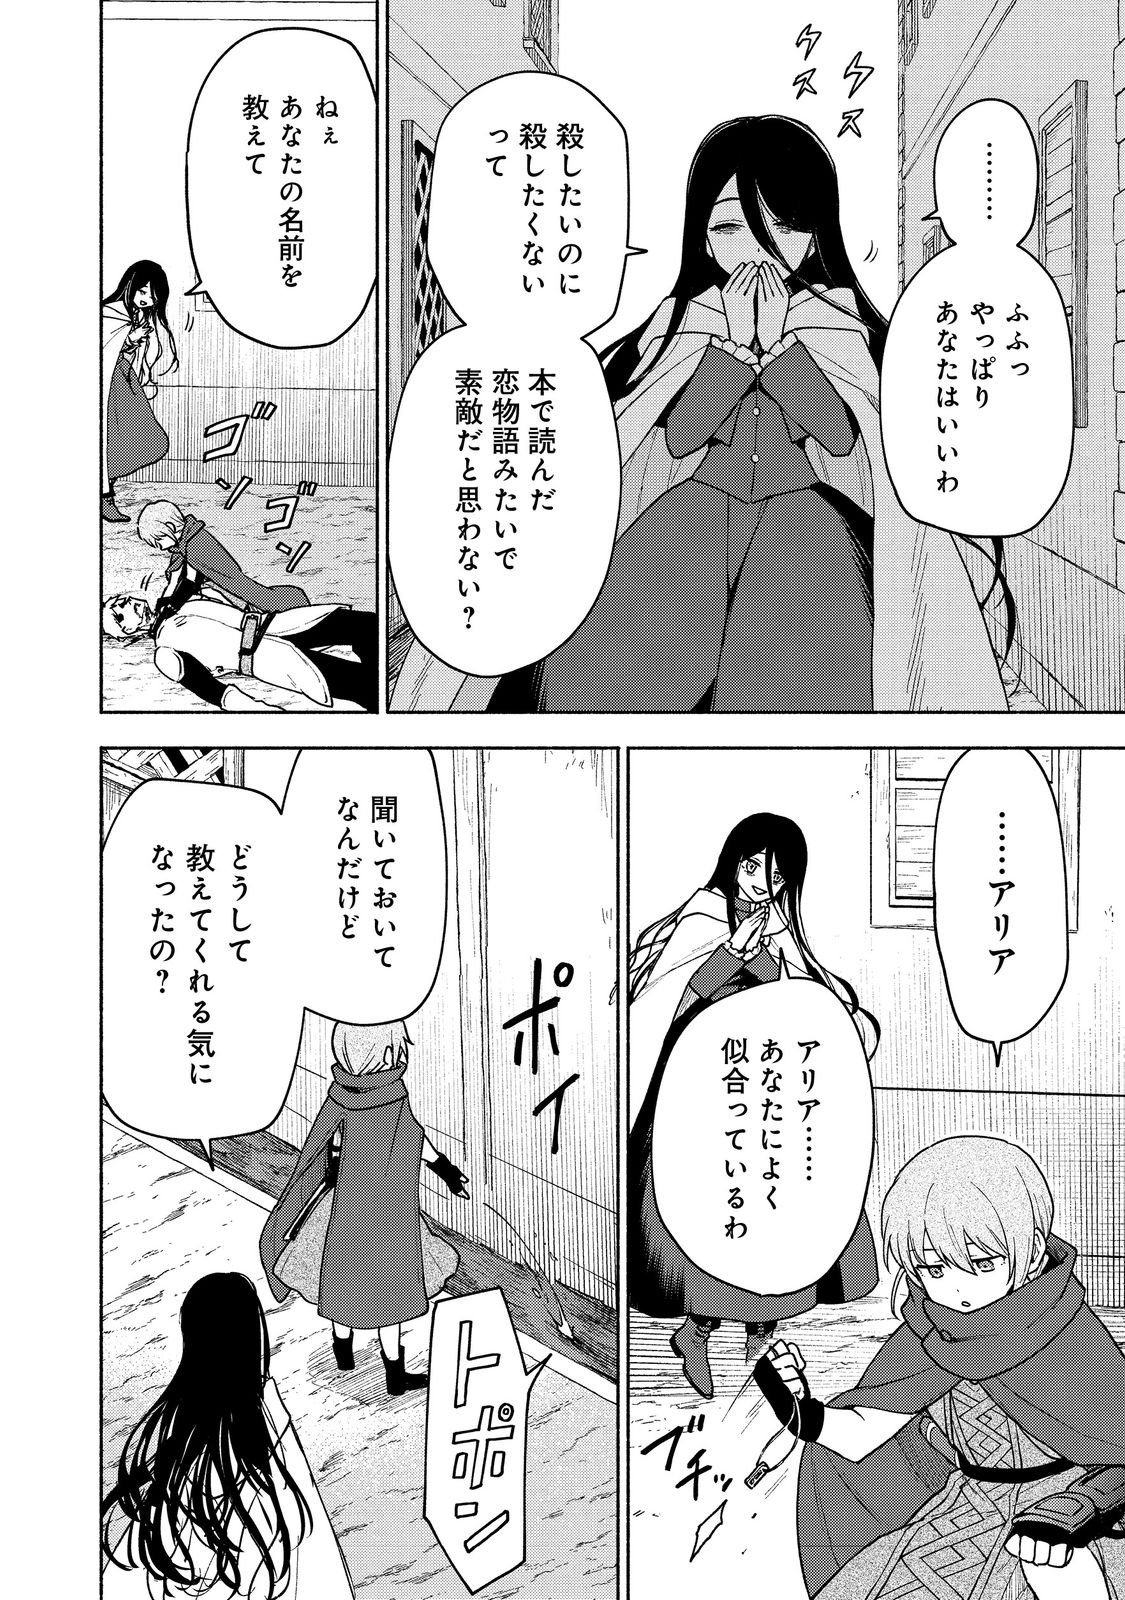 Otome Game no Heroine de Saikyou Survival - Chapter 23 - Page 4